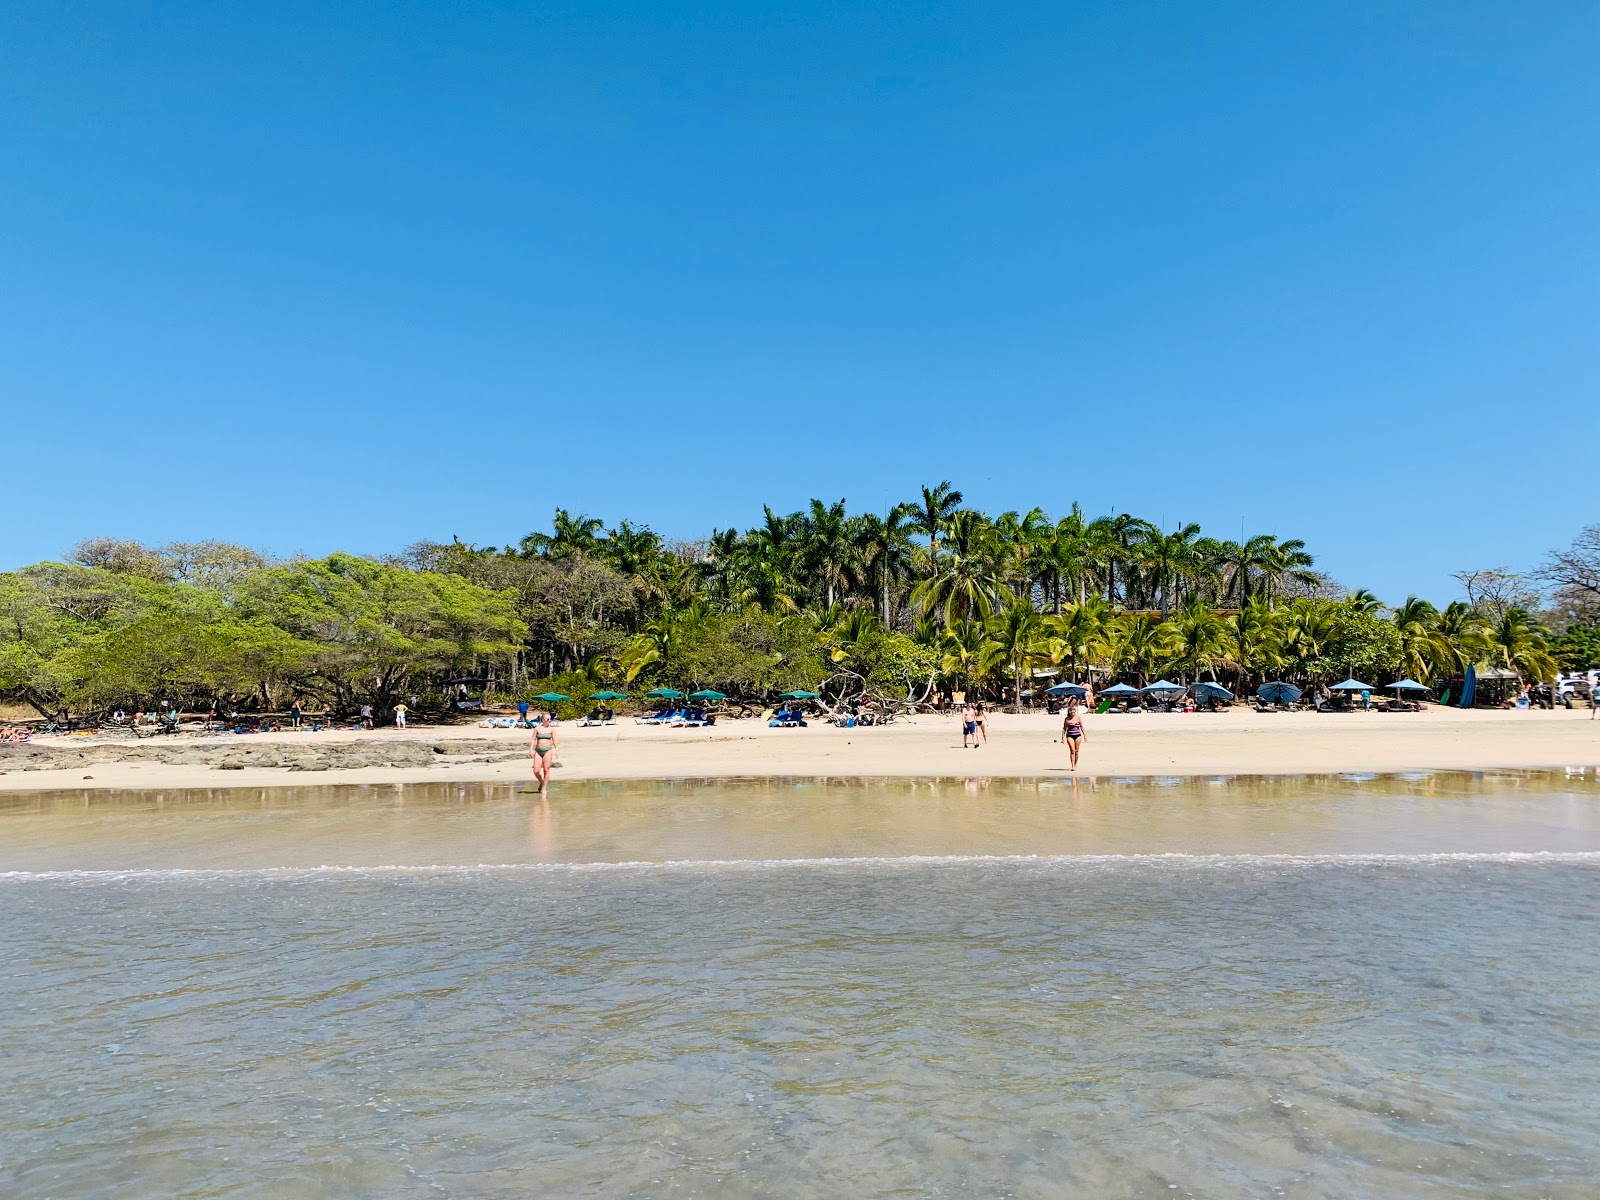 Foto de Playa Avellana - lugar popular entre os apreciadores de relaxamento